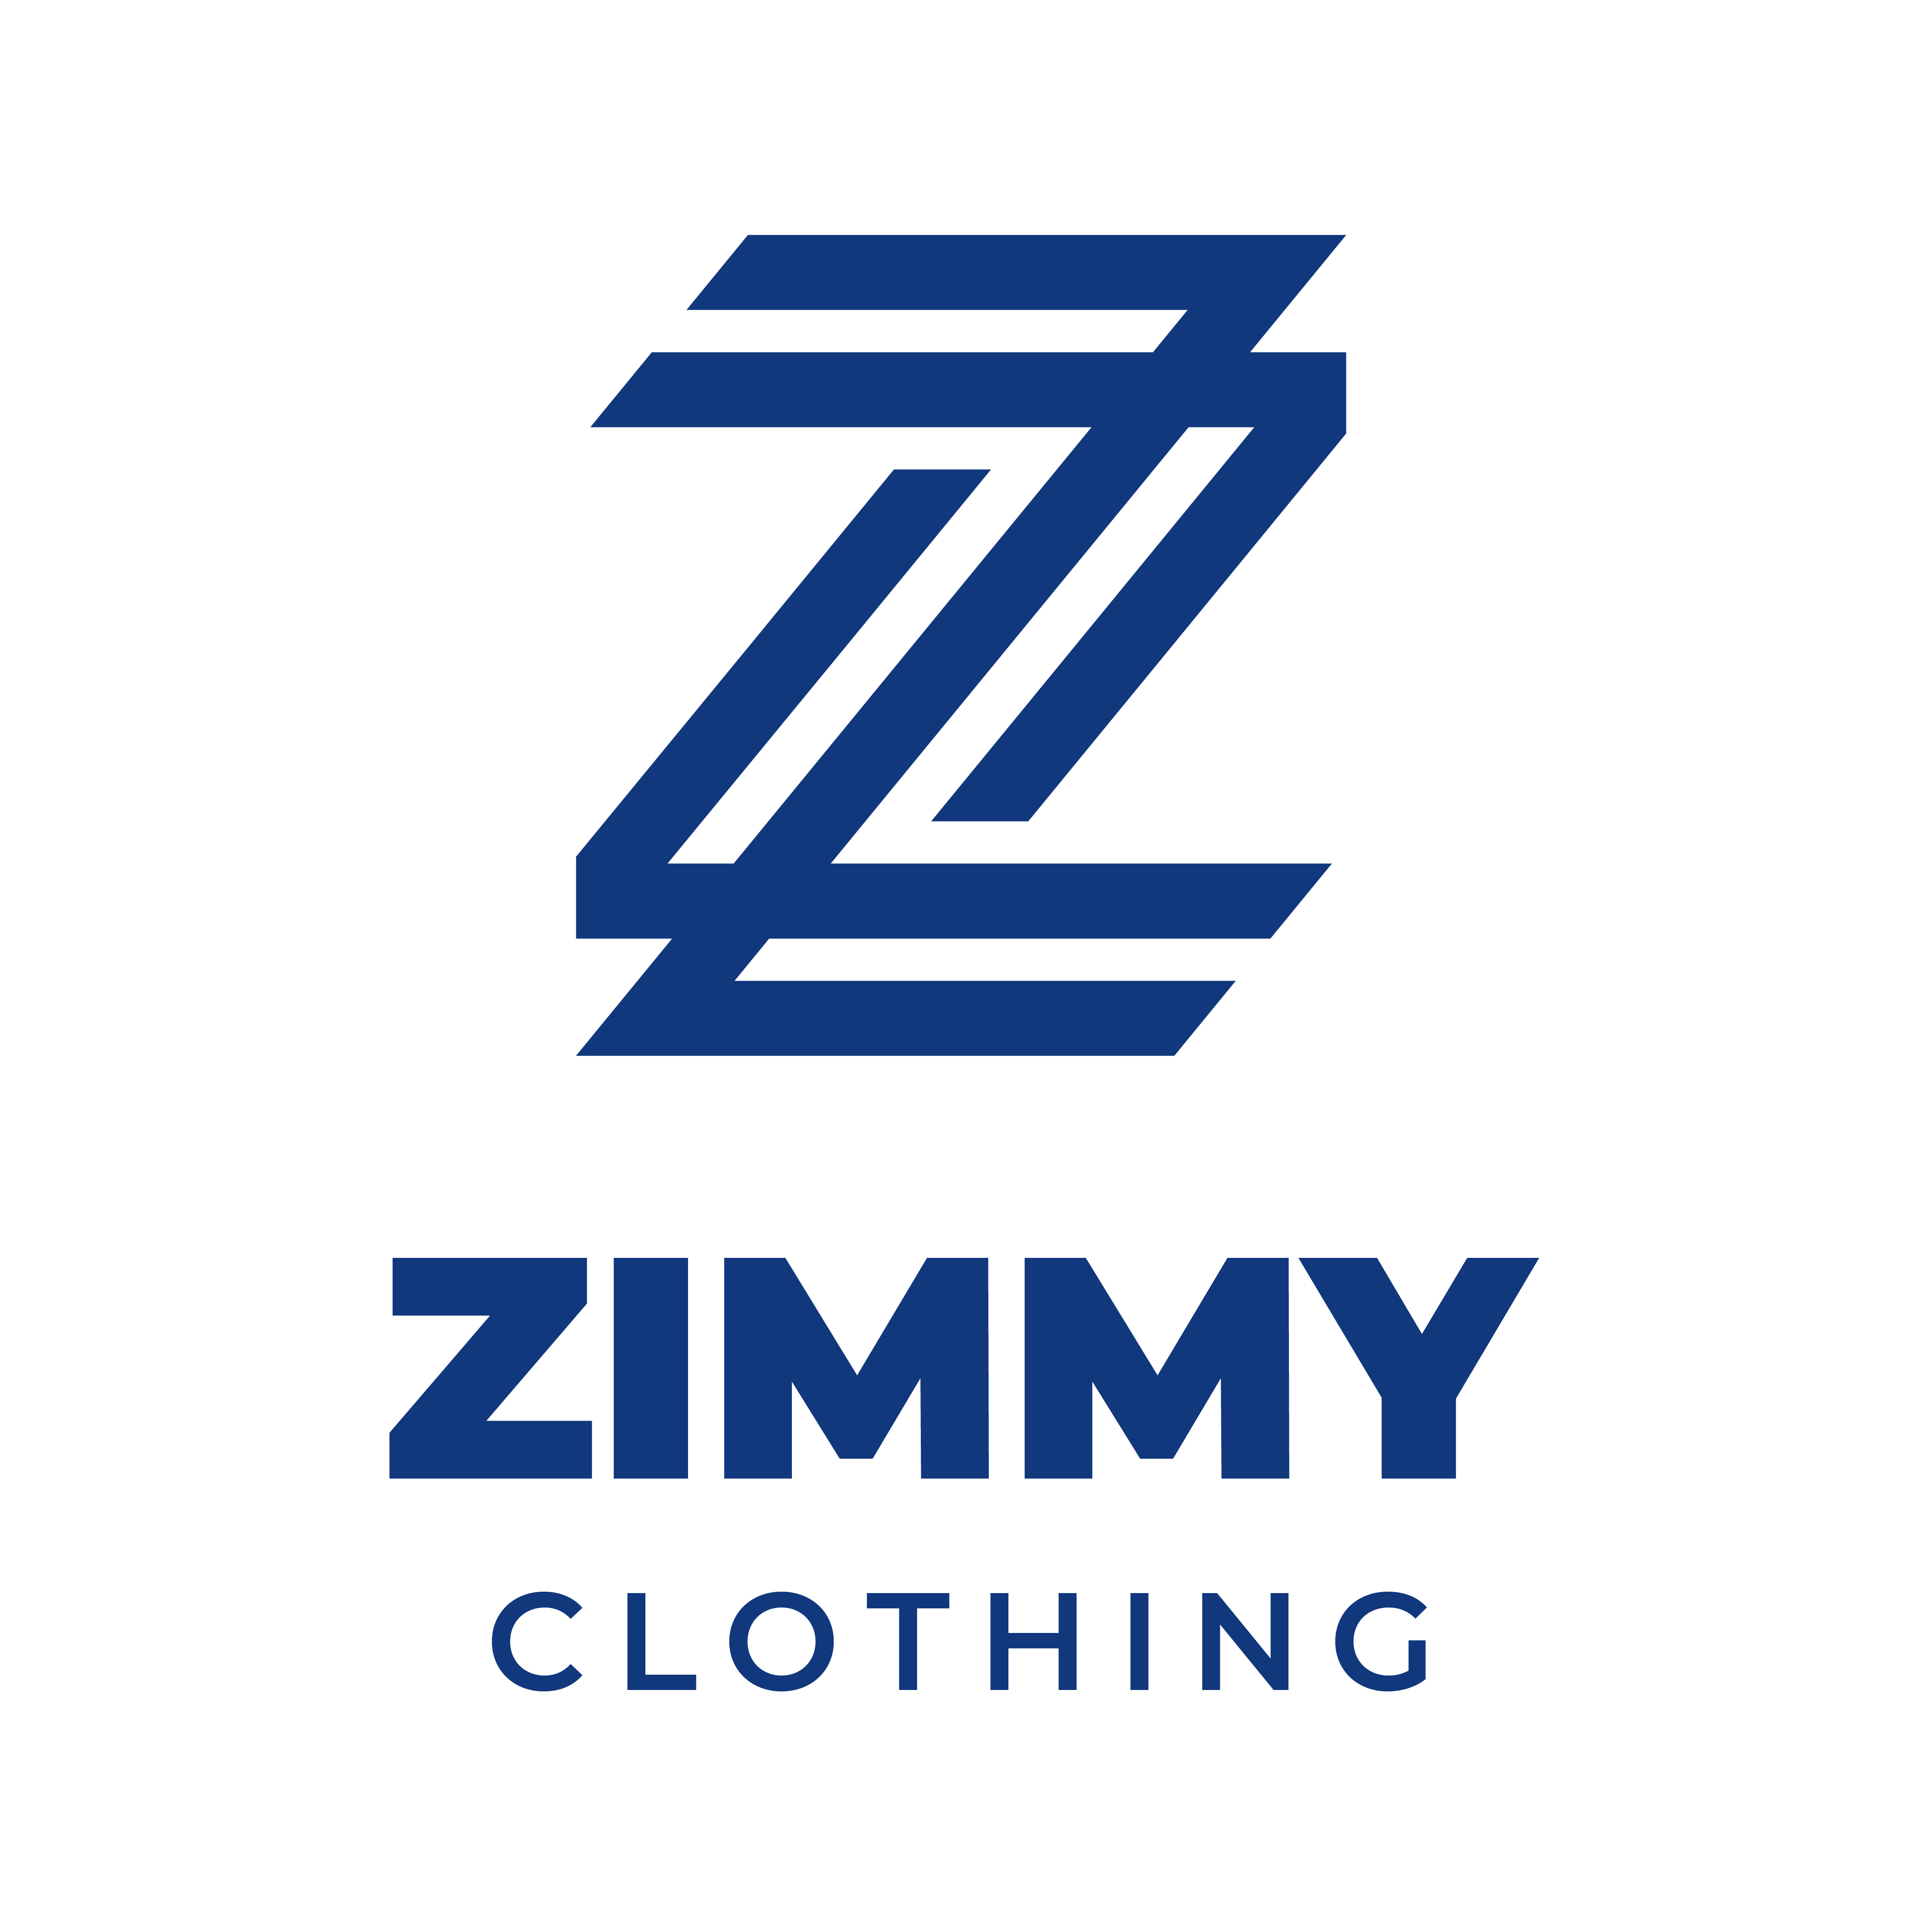 ZIMMY CLOTHING COMPANY LIMITED